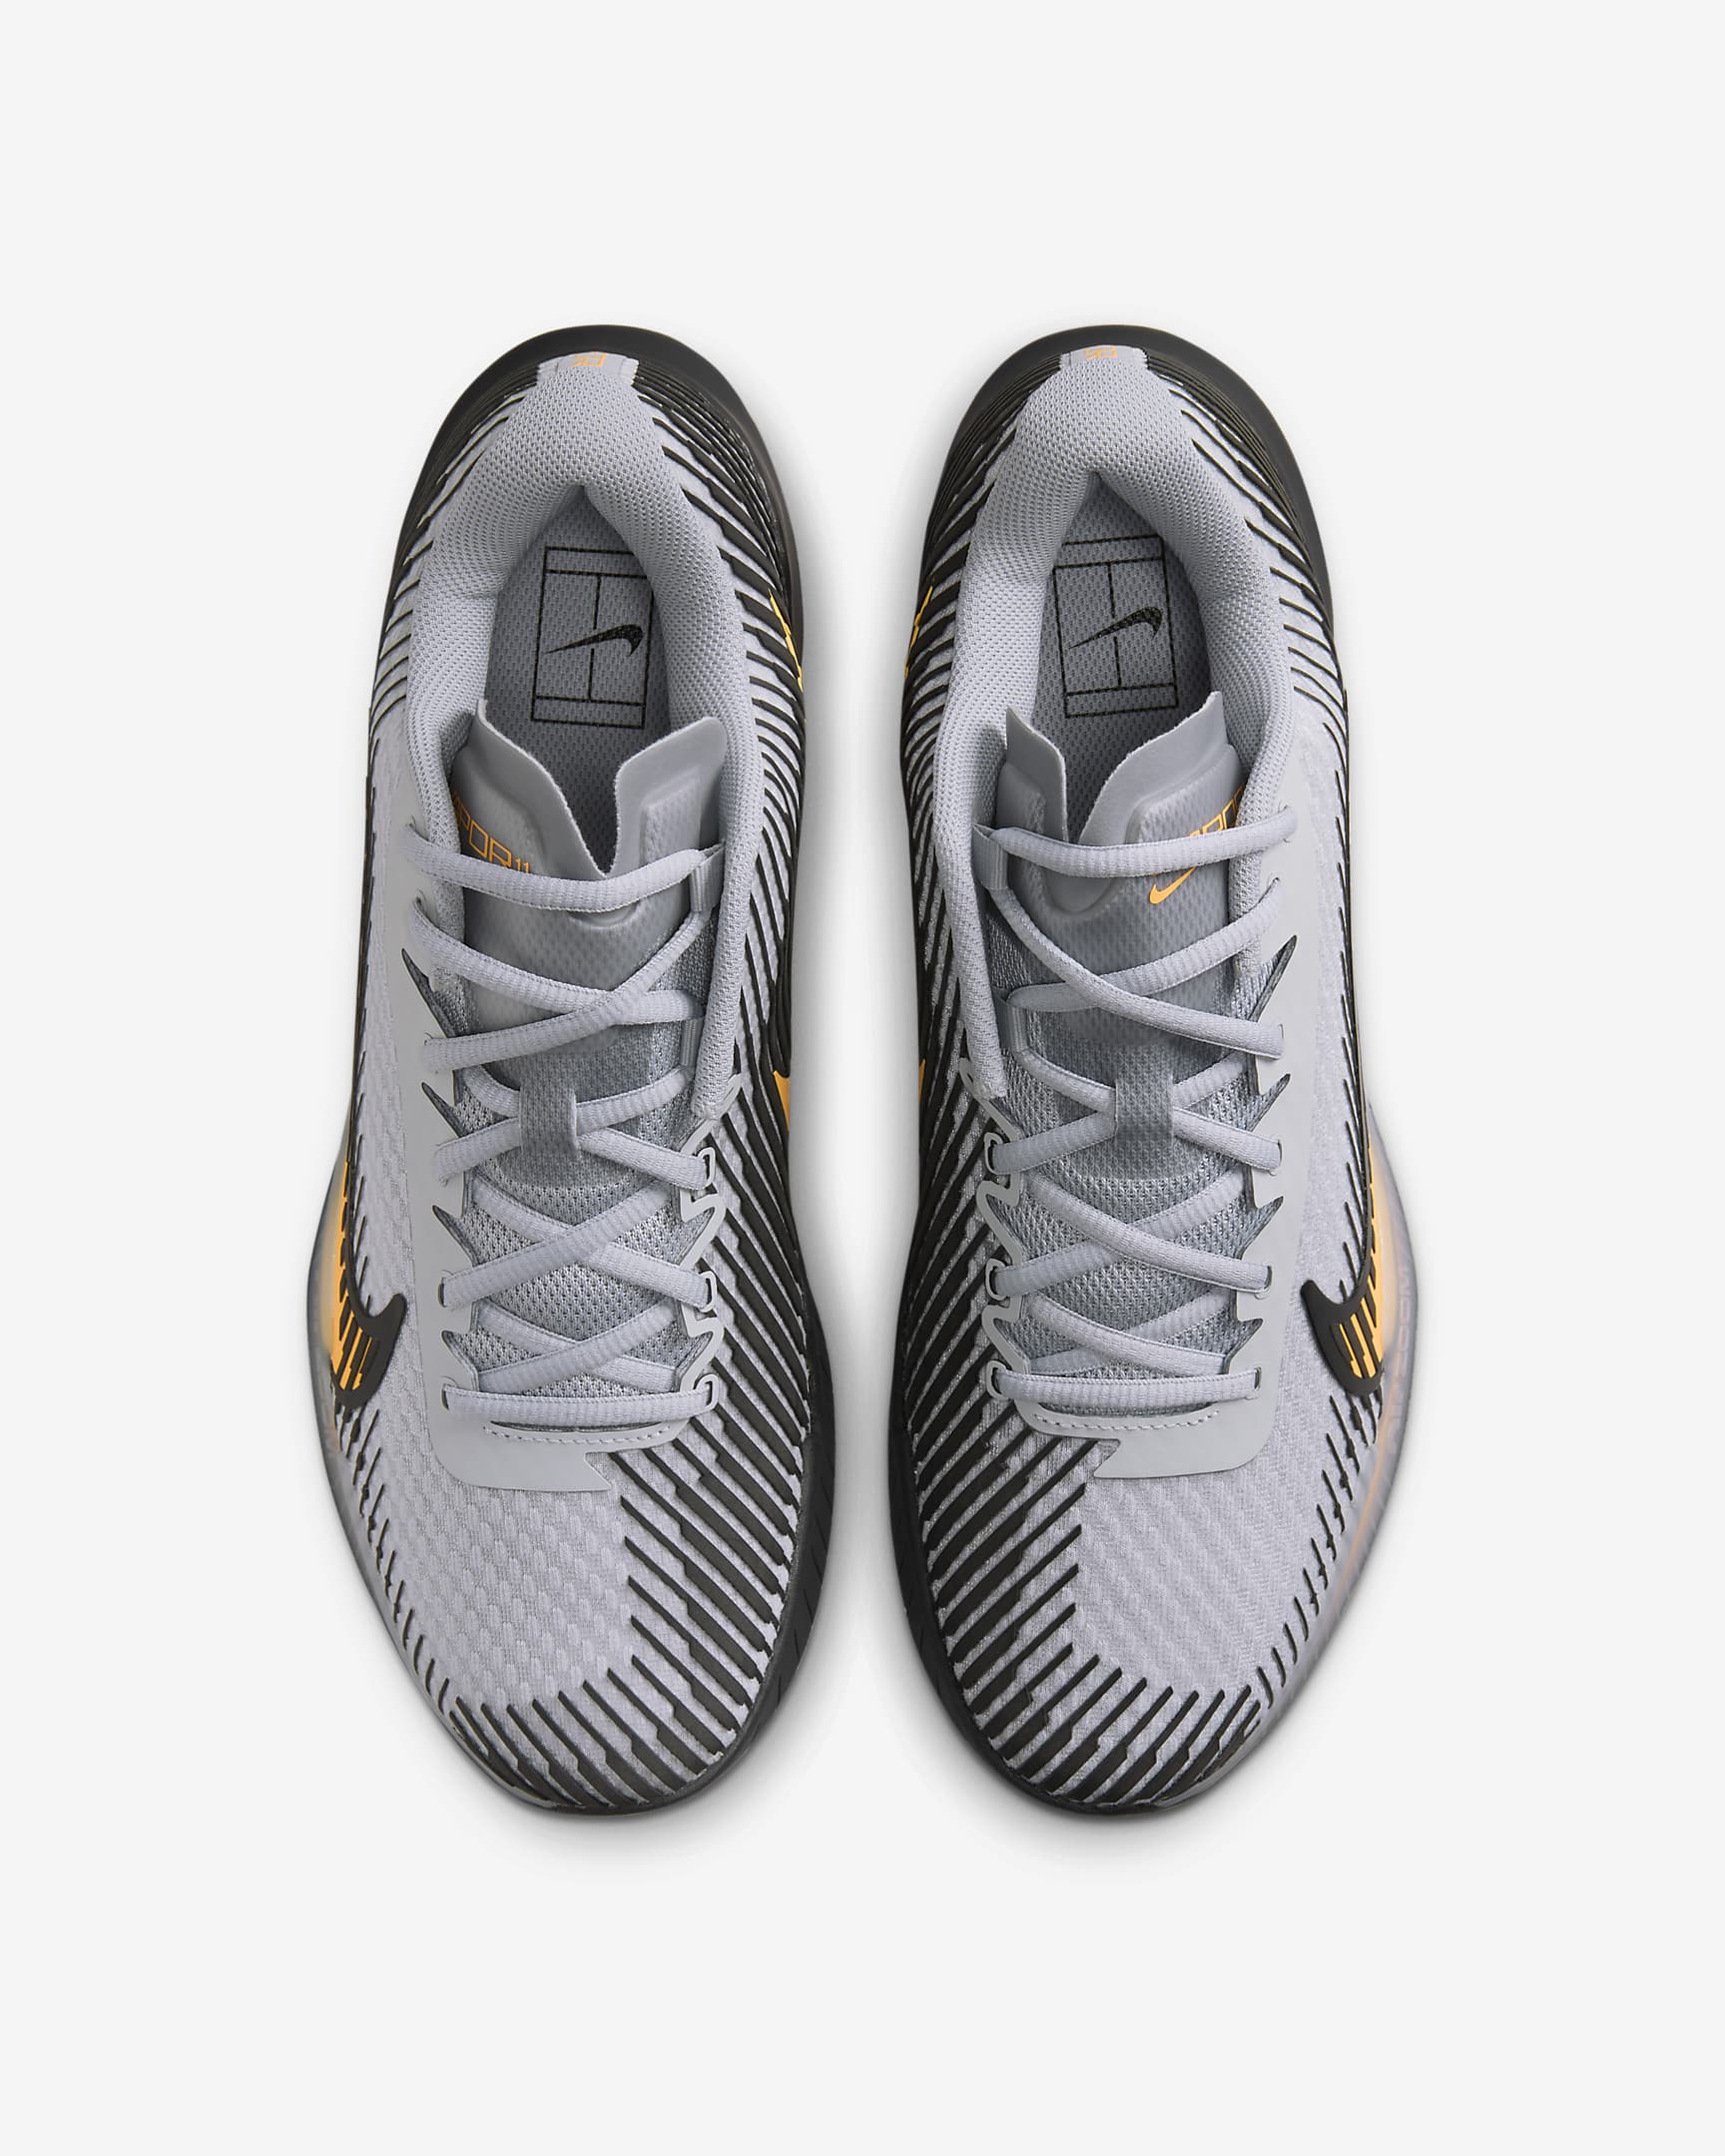 Tenis Nike Court Air Zoom Vapor 11 (gris/naranja)